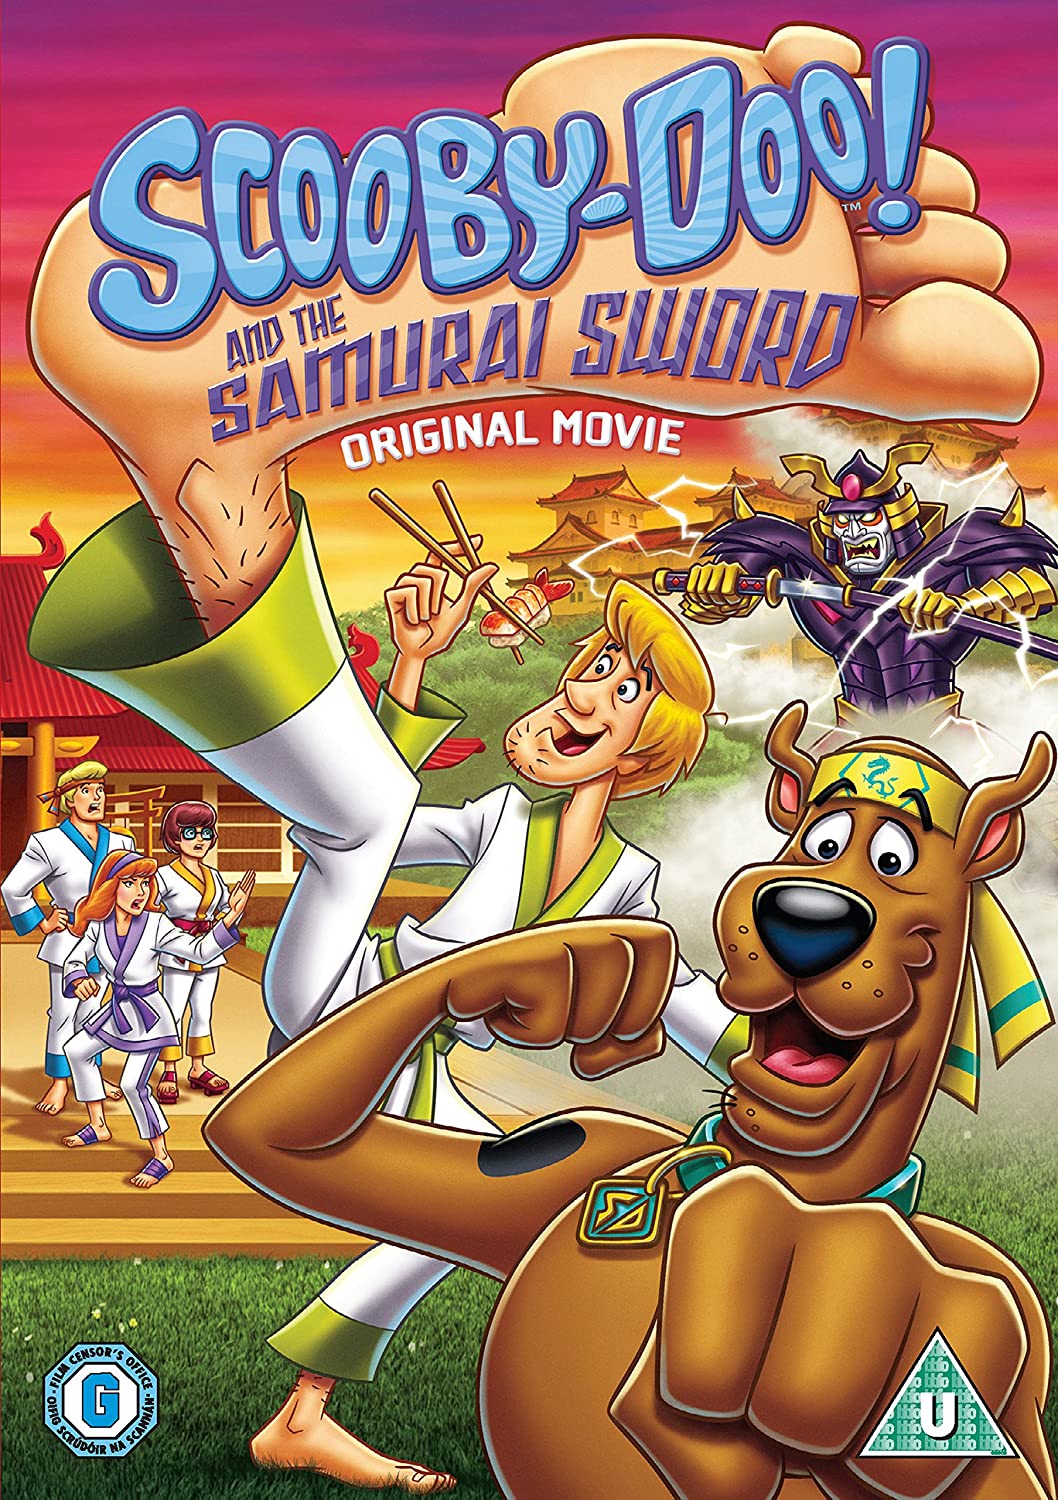 Scooby-Doo: The Samurai Sword [2009] - Mystery/Comedy [DVD]